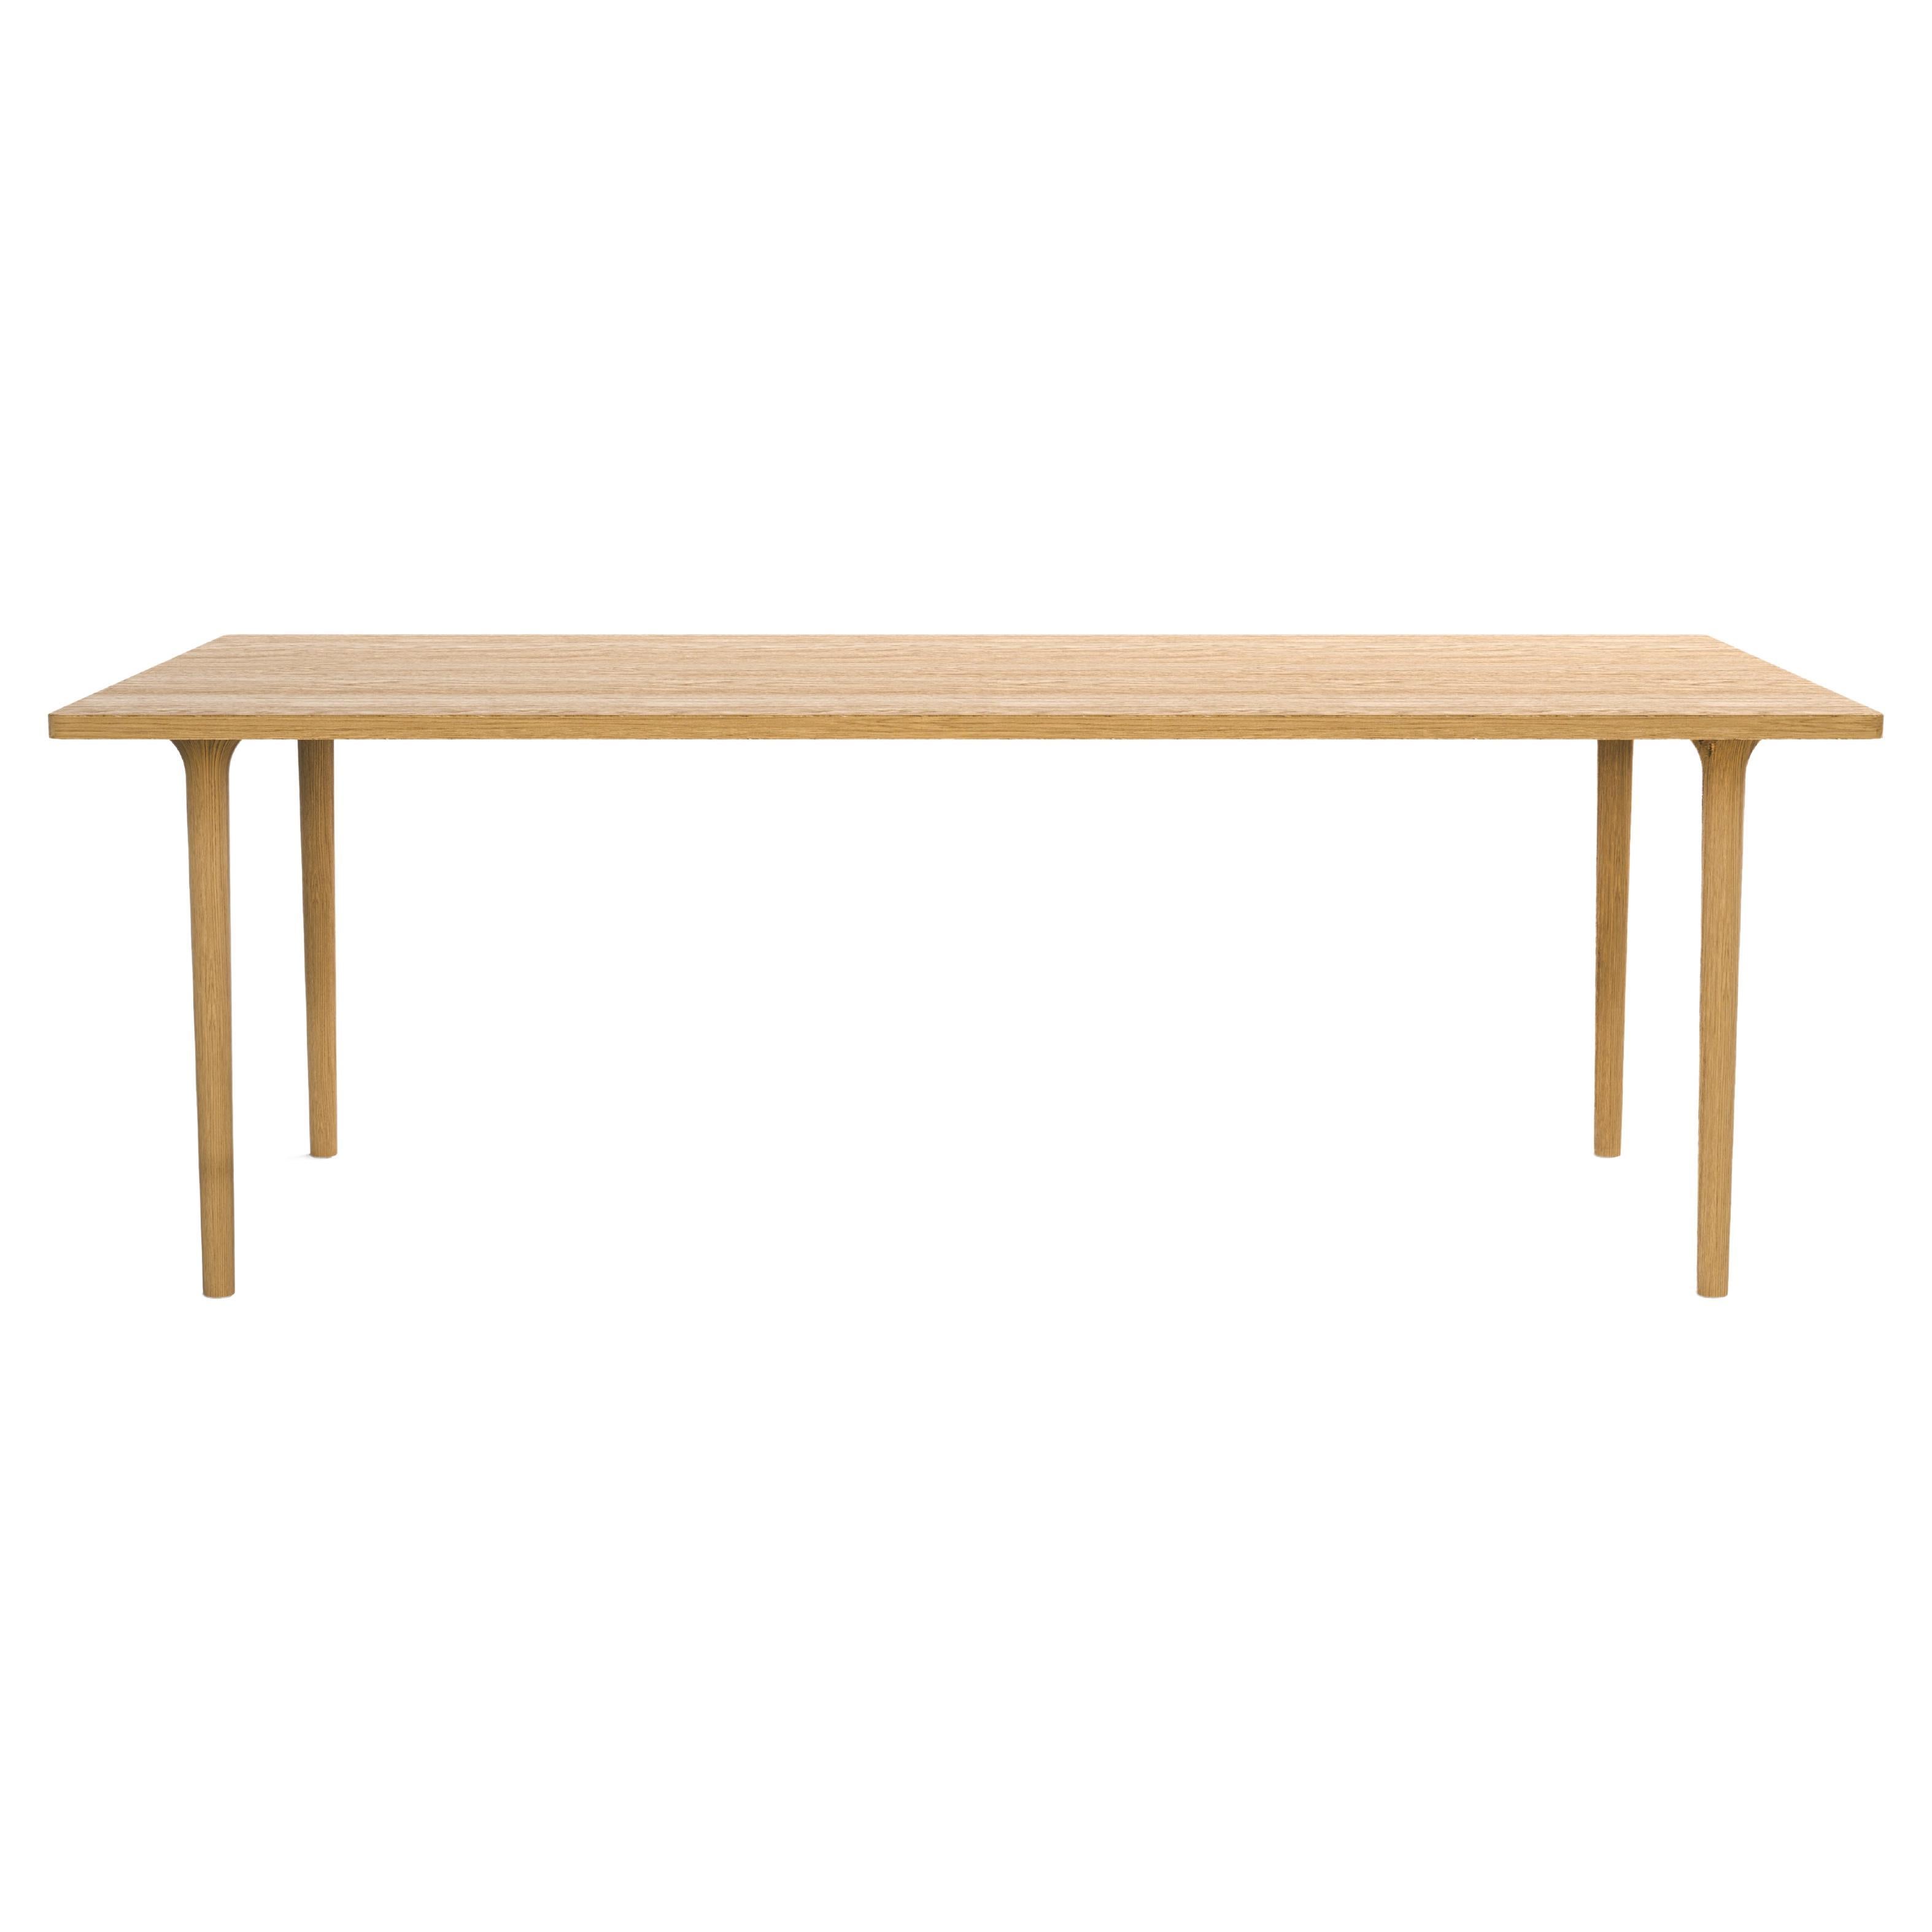 Minimalist Modern Table in Oak Wood Rectangular